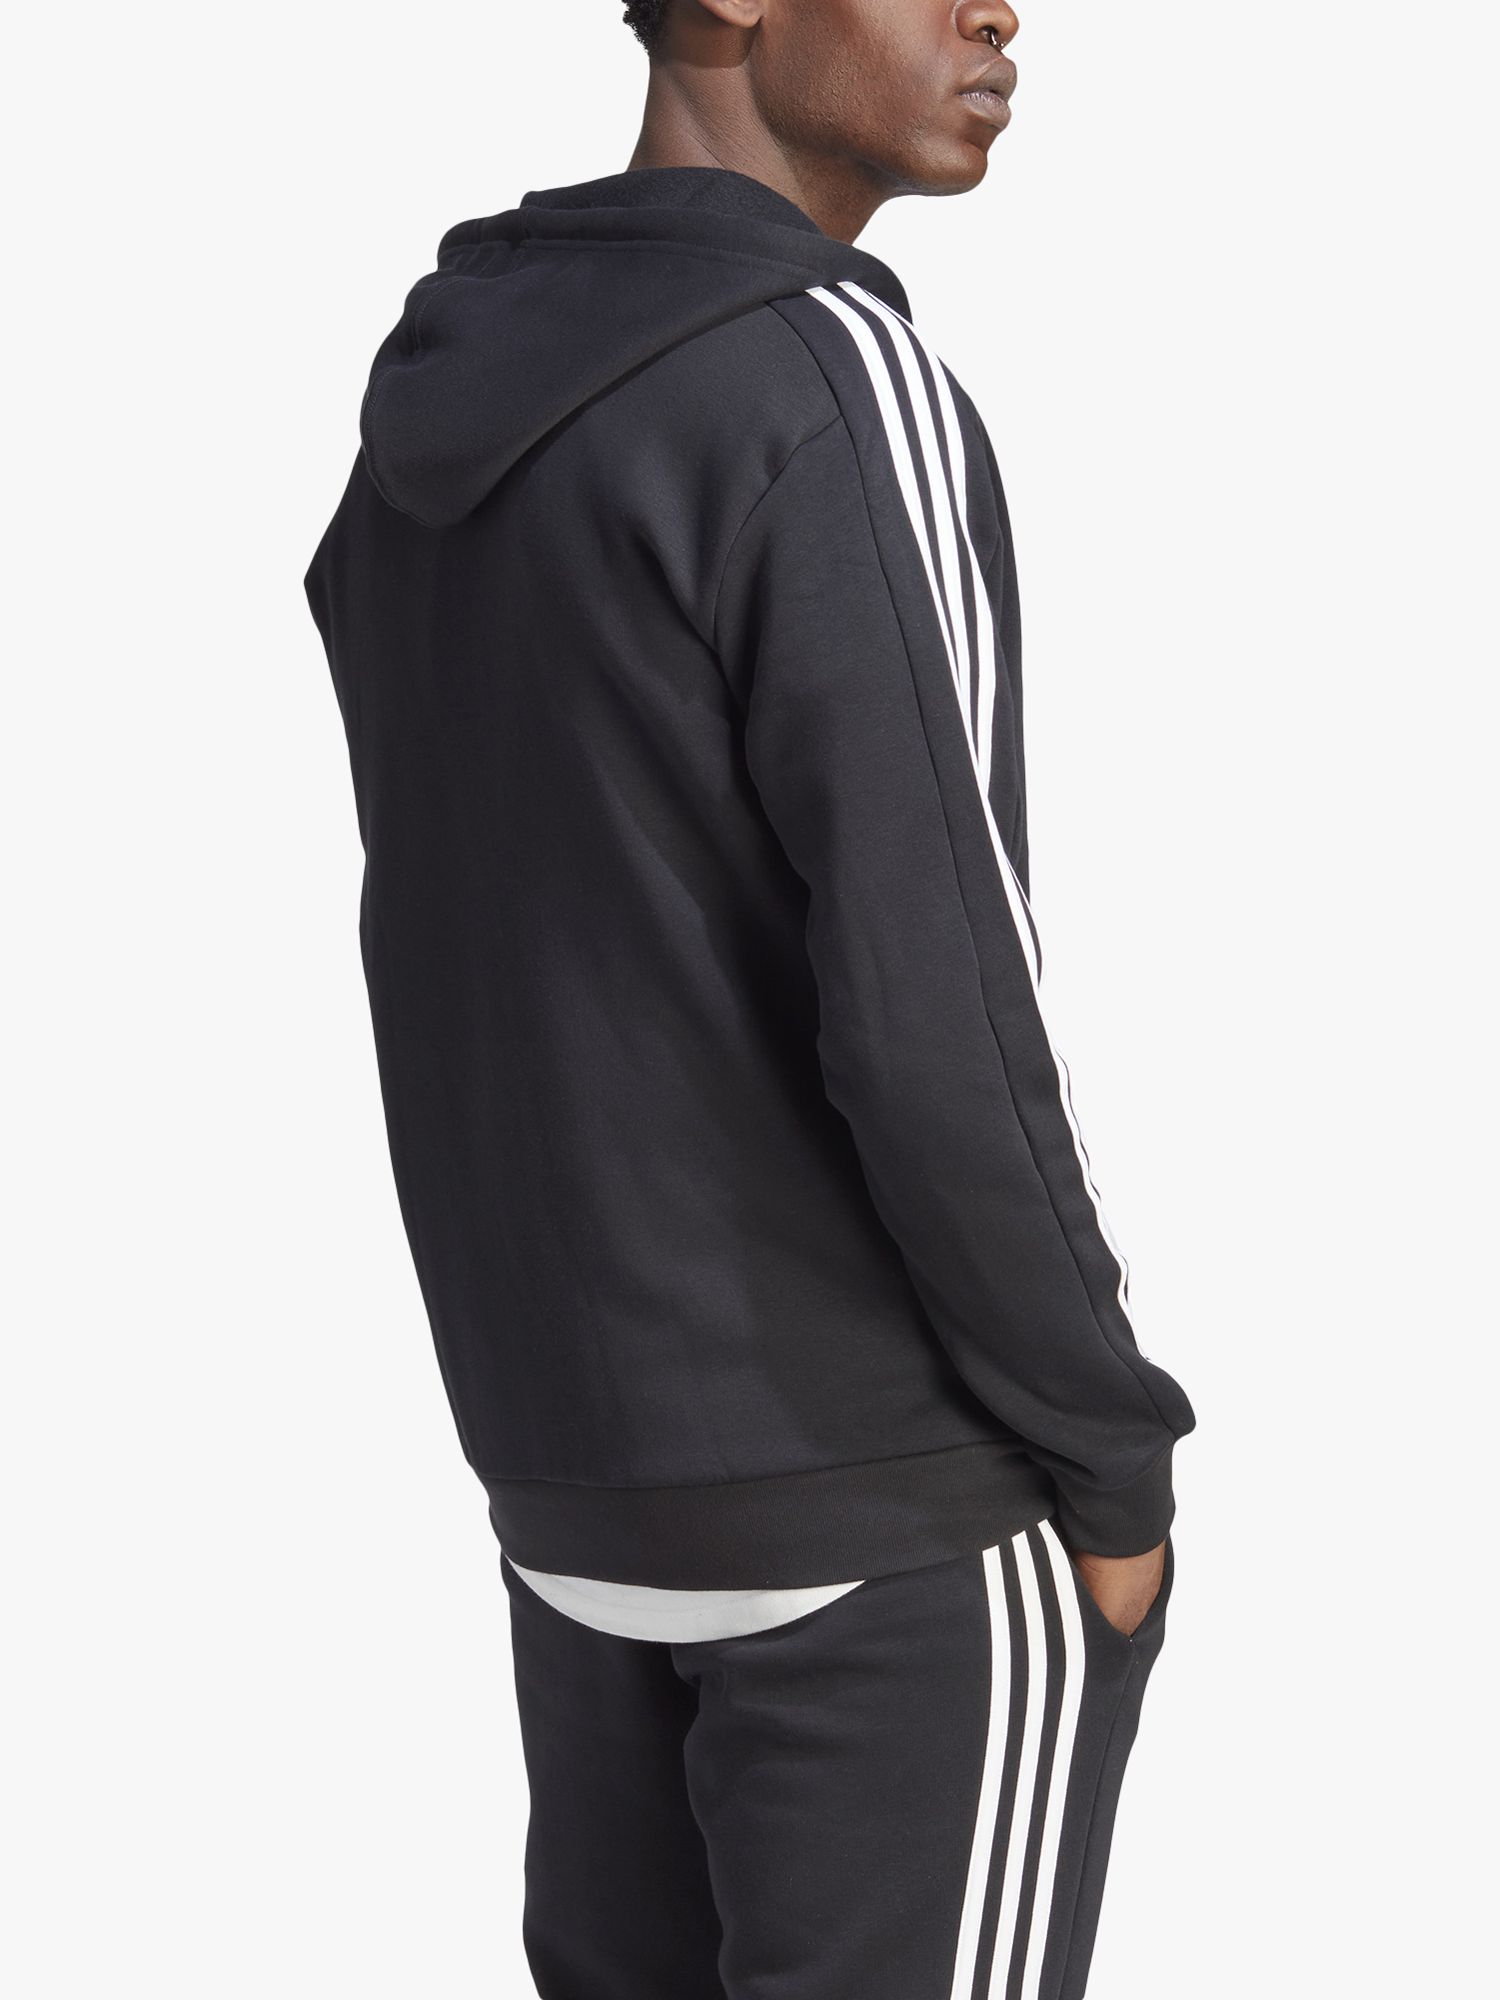 adidas Essentials Fleece 3-Stripes Shorts - Black | Men's Lifestyle |  adidas US